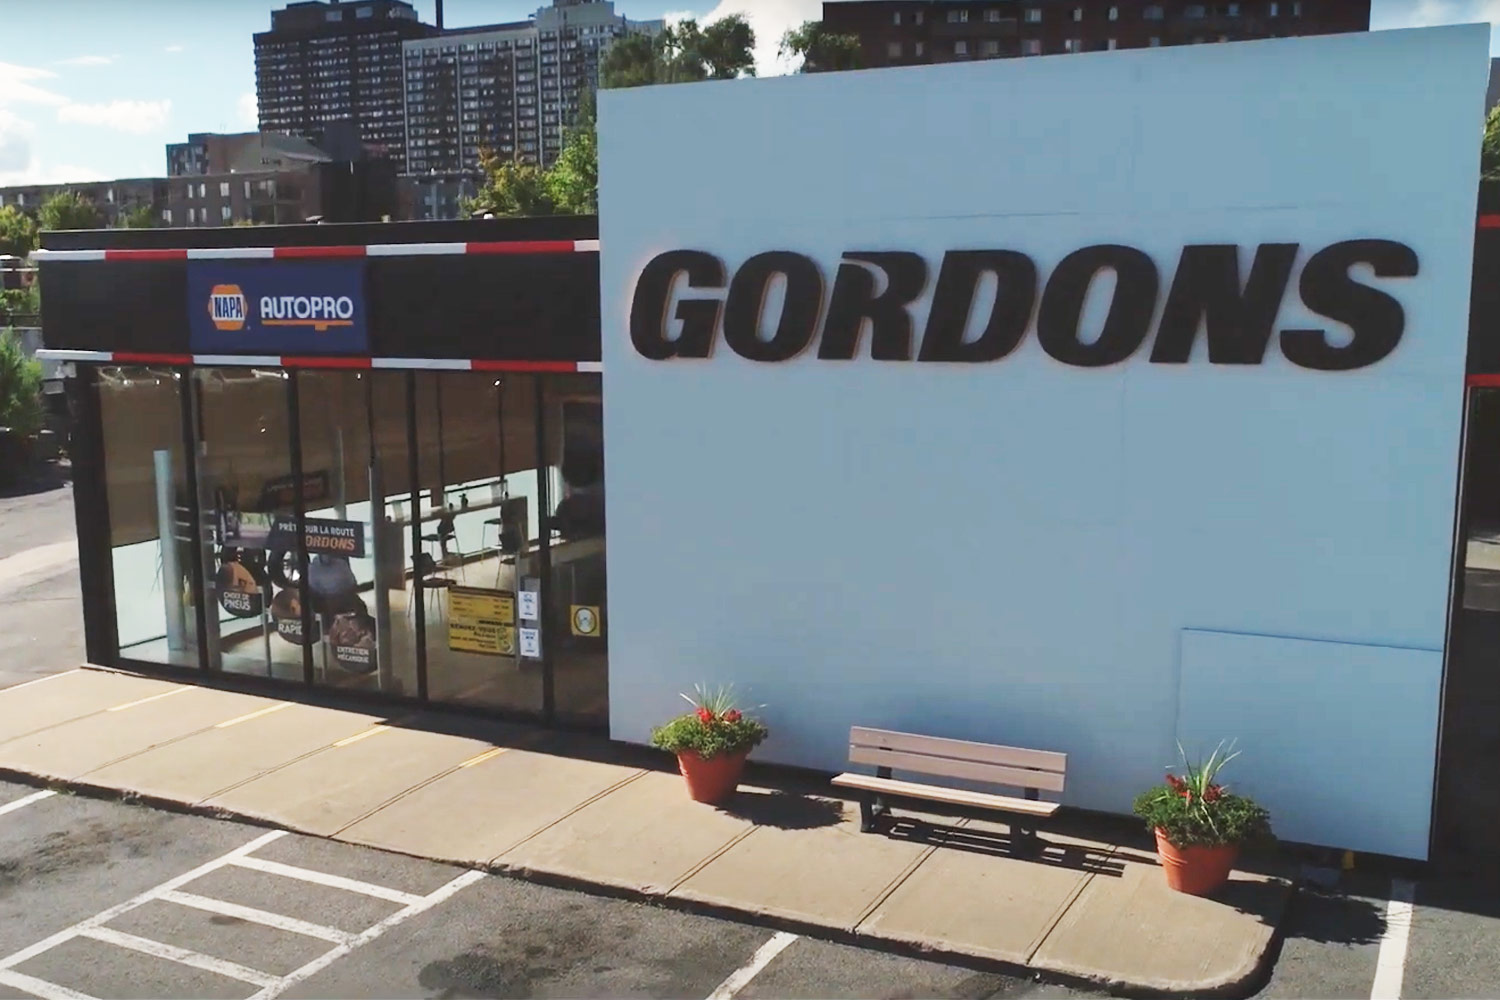 Gordons Tires - The Auto Centre Of The Future